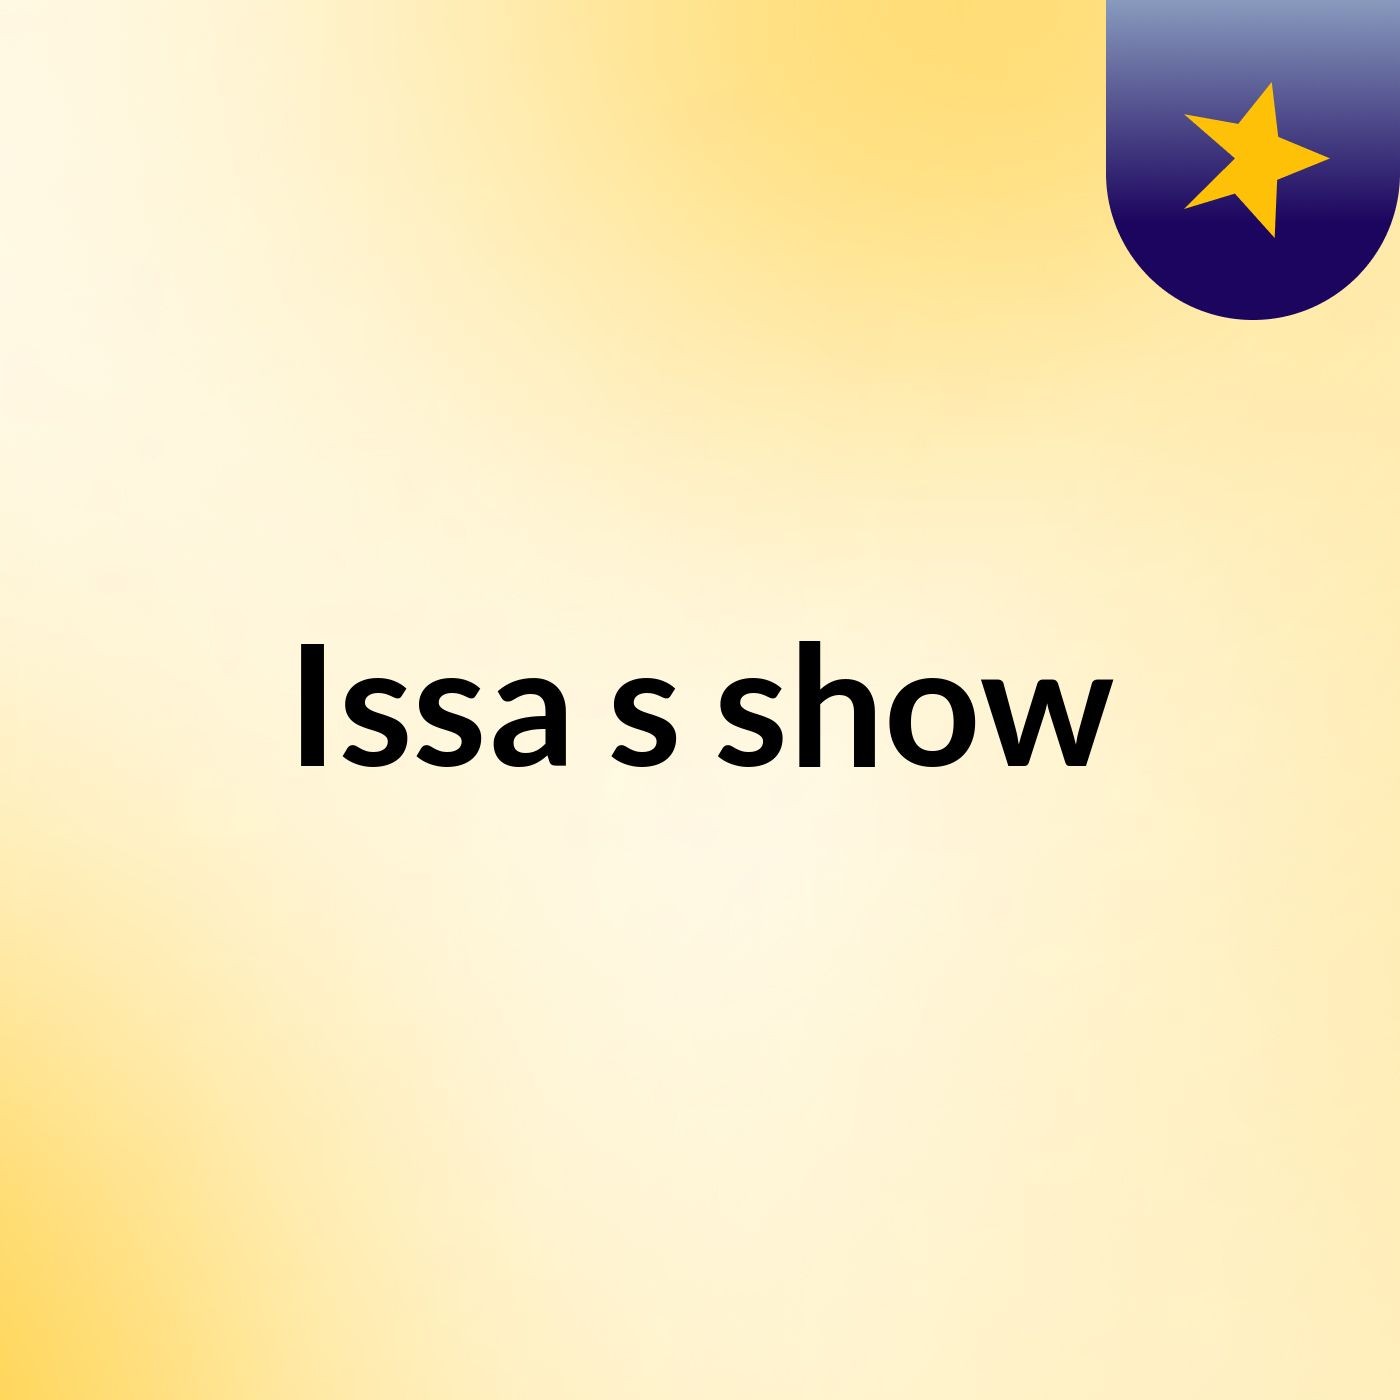 Issa's show